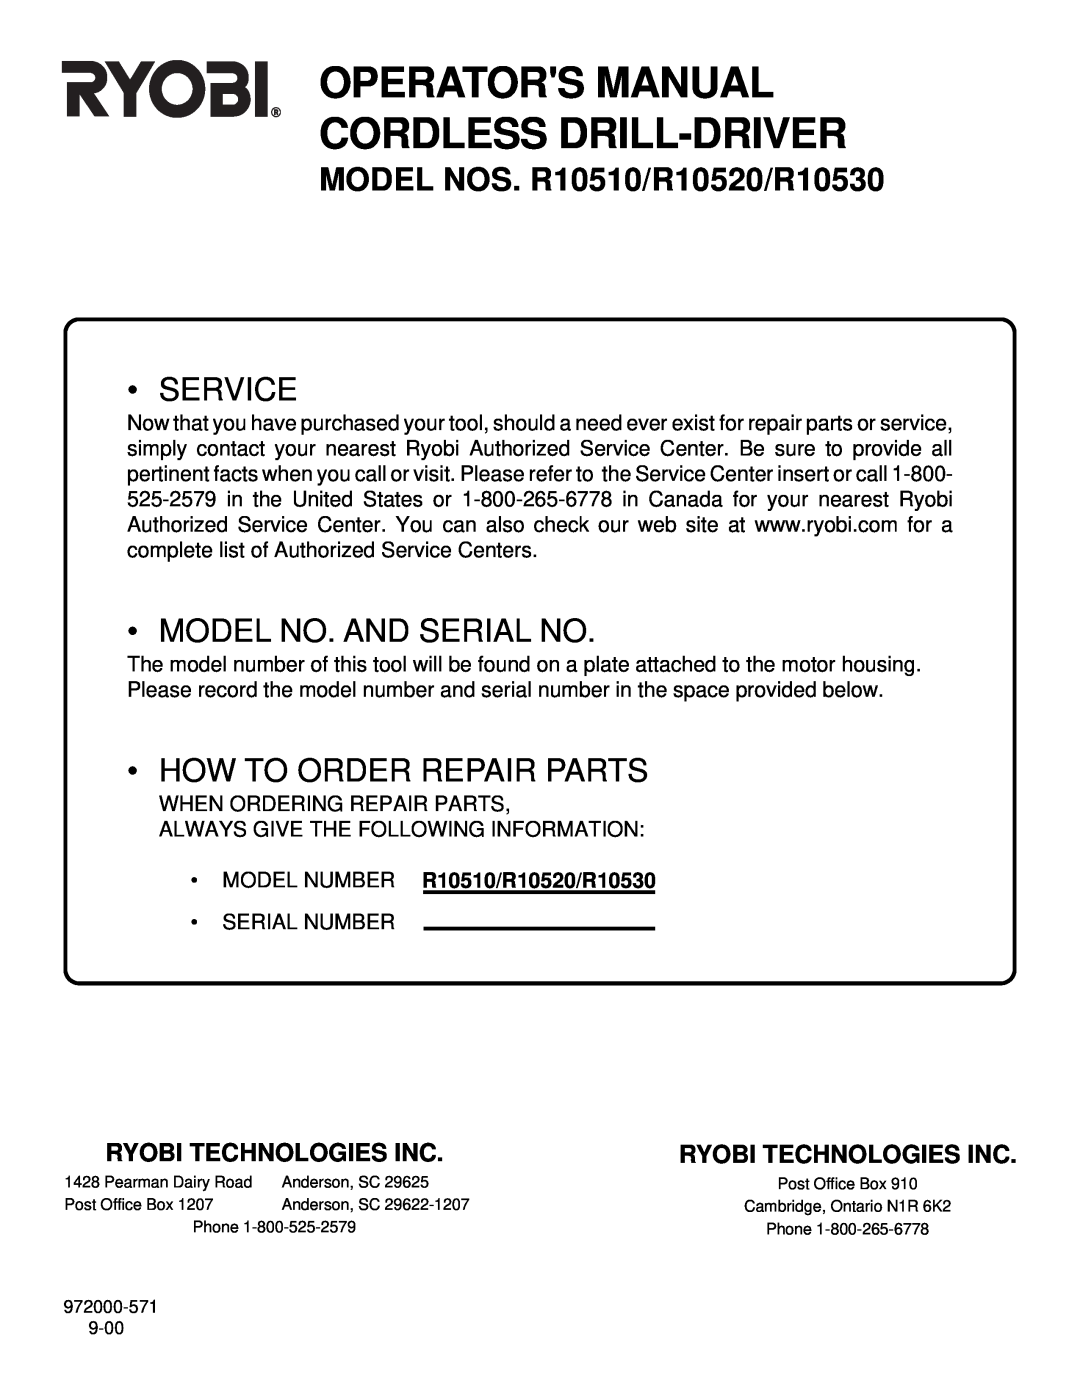 Ryobi manual Operators Manual Cordless Drill-Driver, MODEL NOS. R10510/R10520/R10530, Service, Model No. And Serial No 